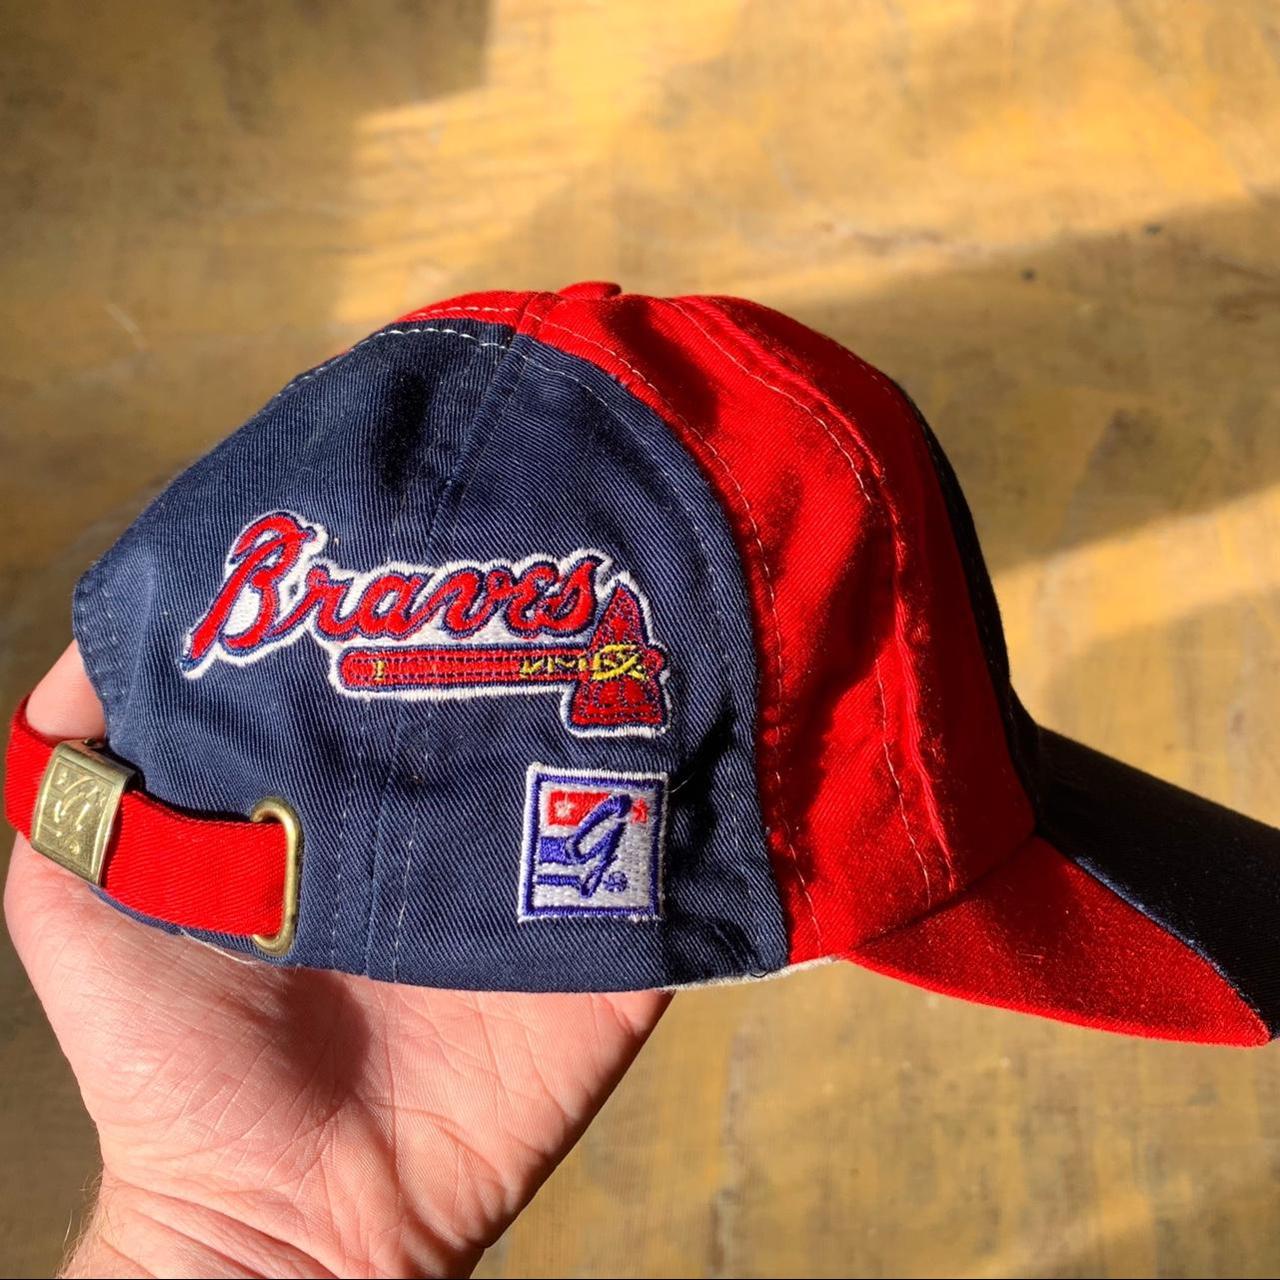 Vintage 90s Atlanta Braves Hat - Depop